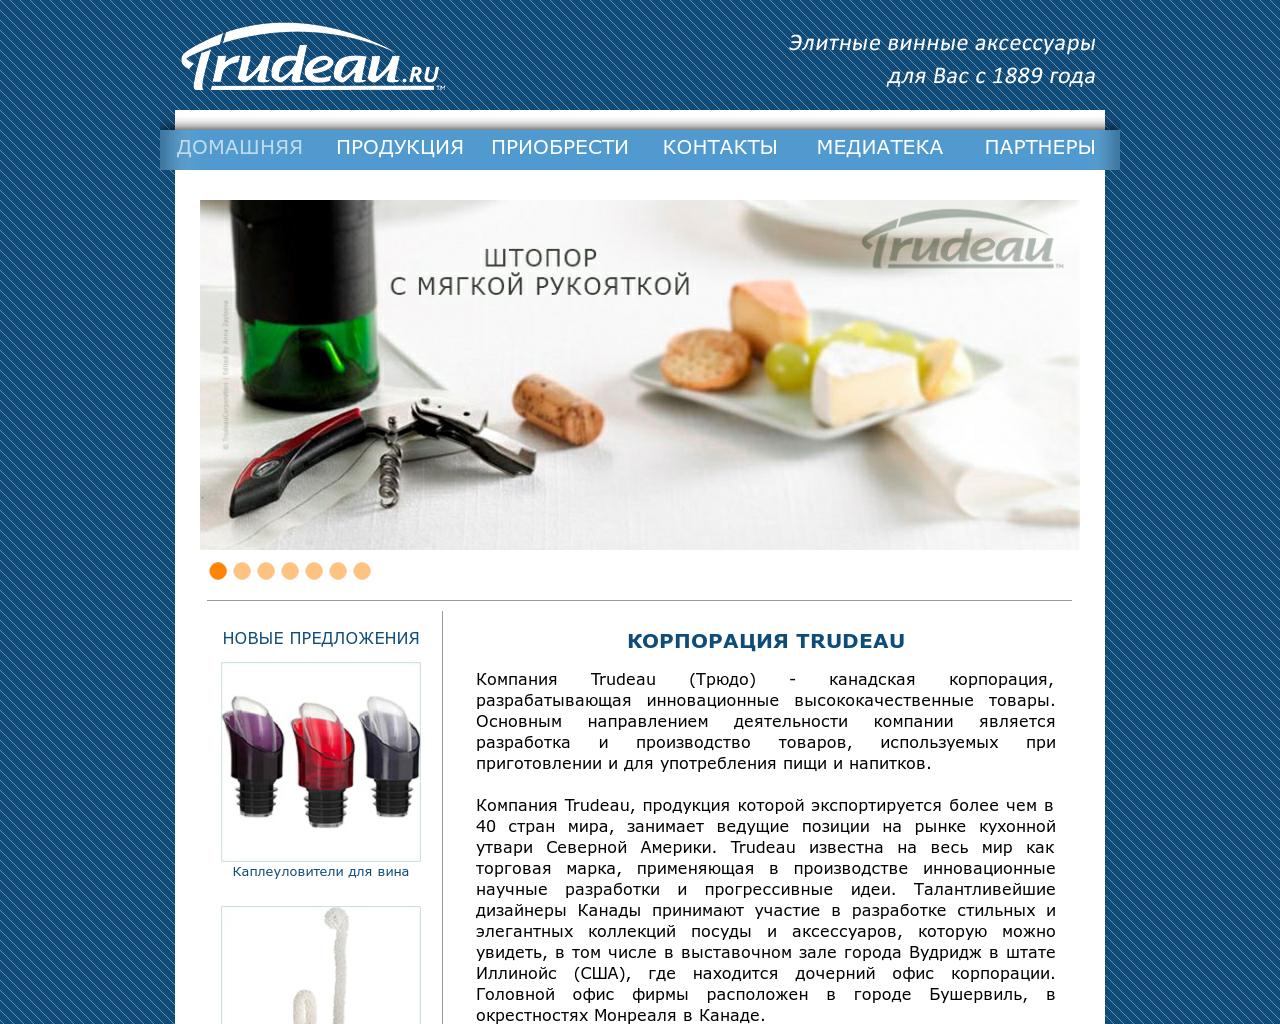 Изображение сайта trudeau.ru в разрешении 1280x1024